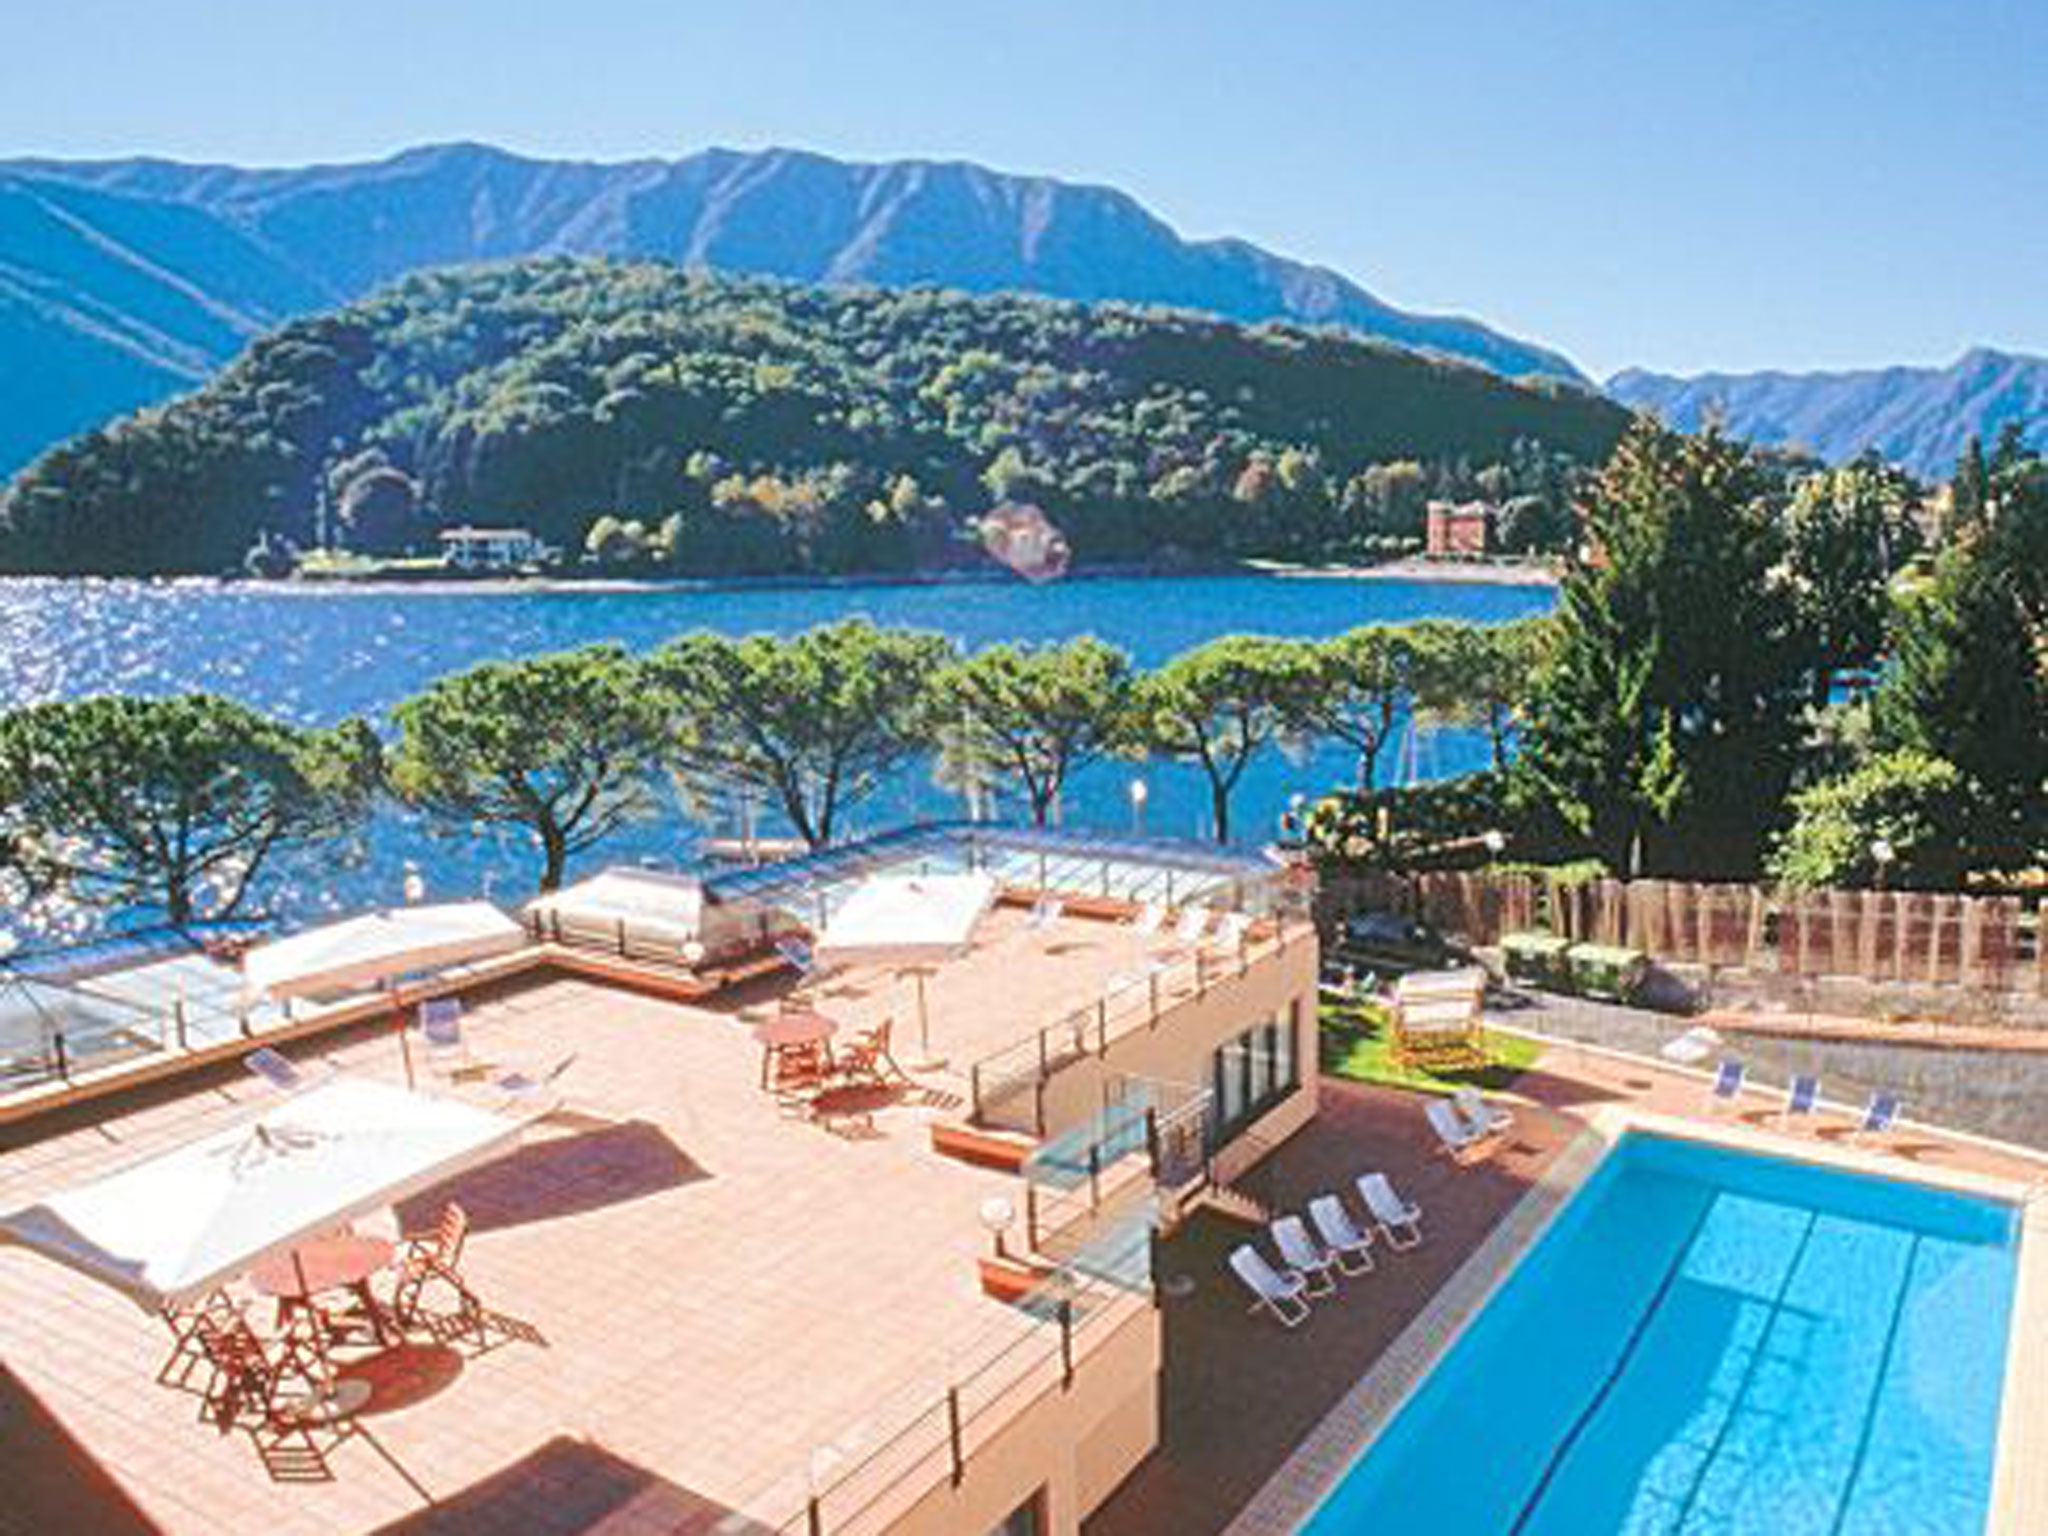 Lake escape: the Hotel Lenno in Italy